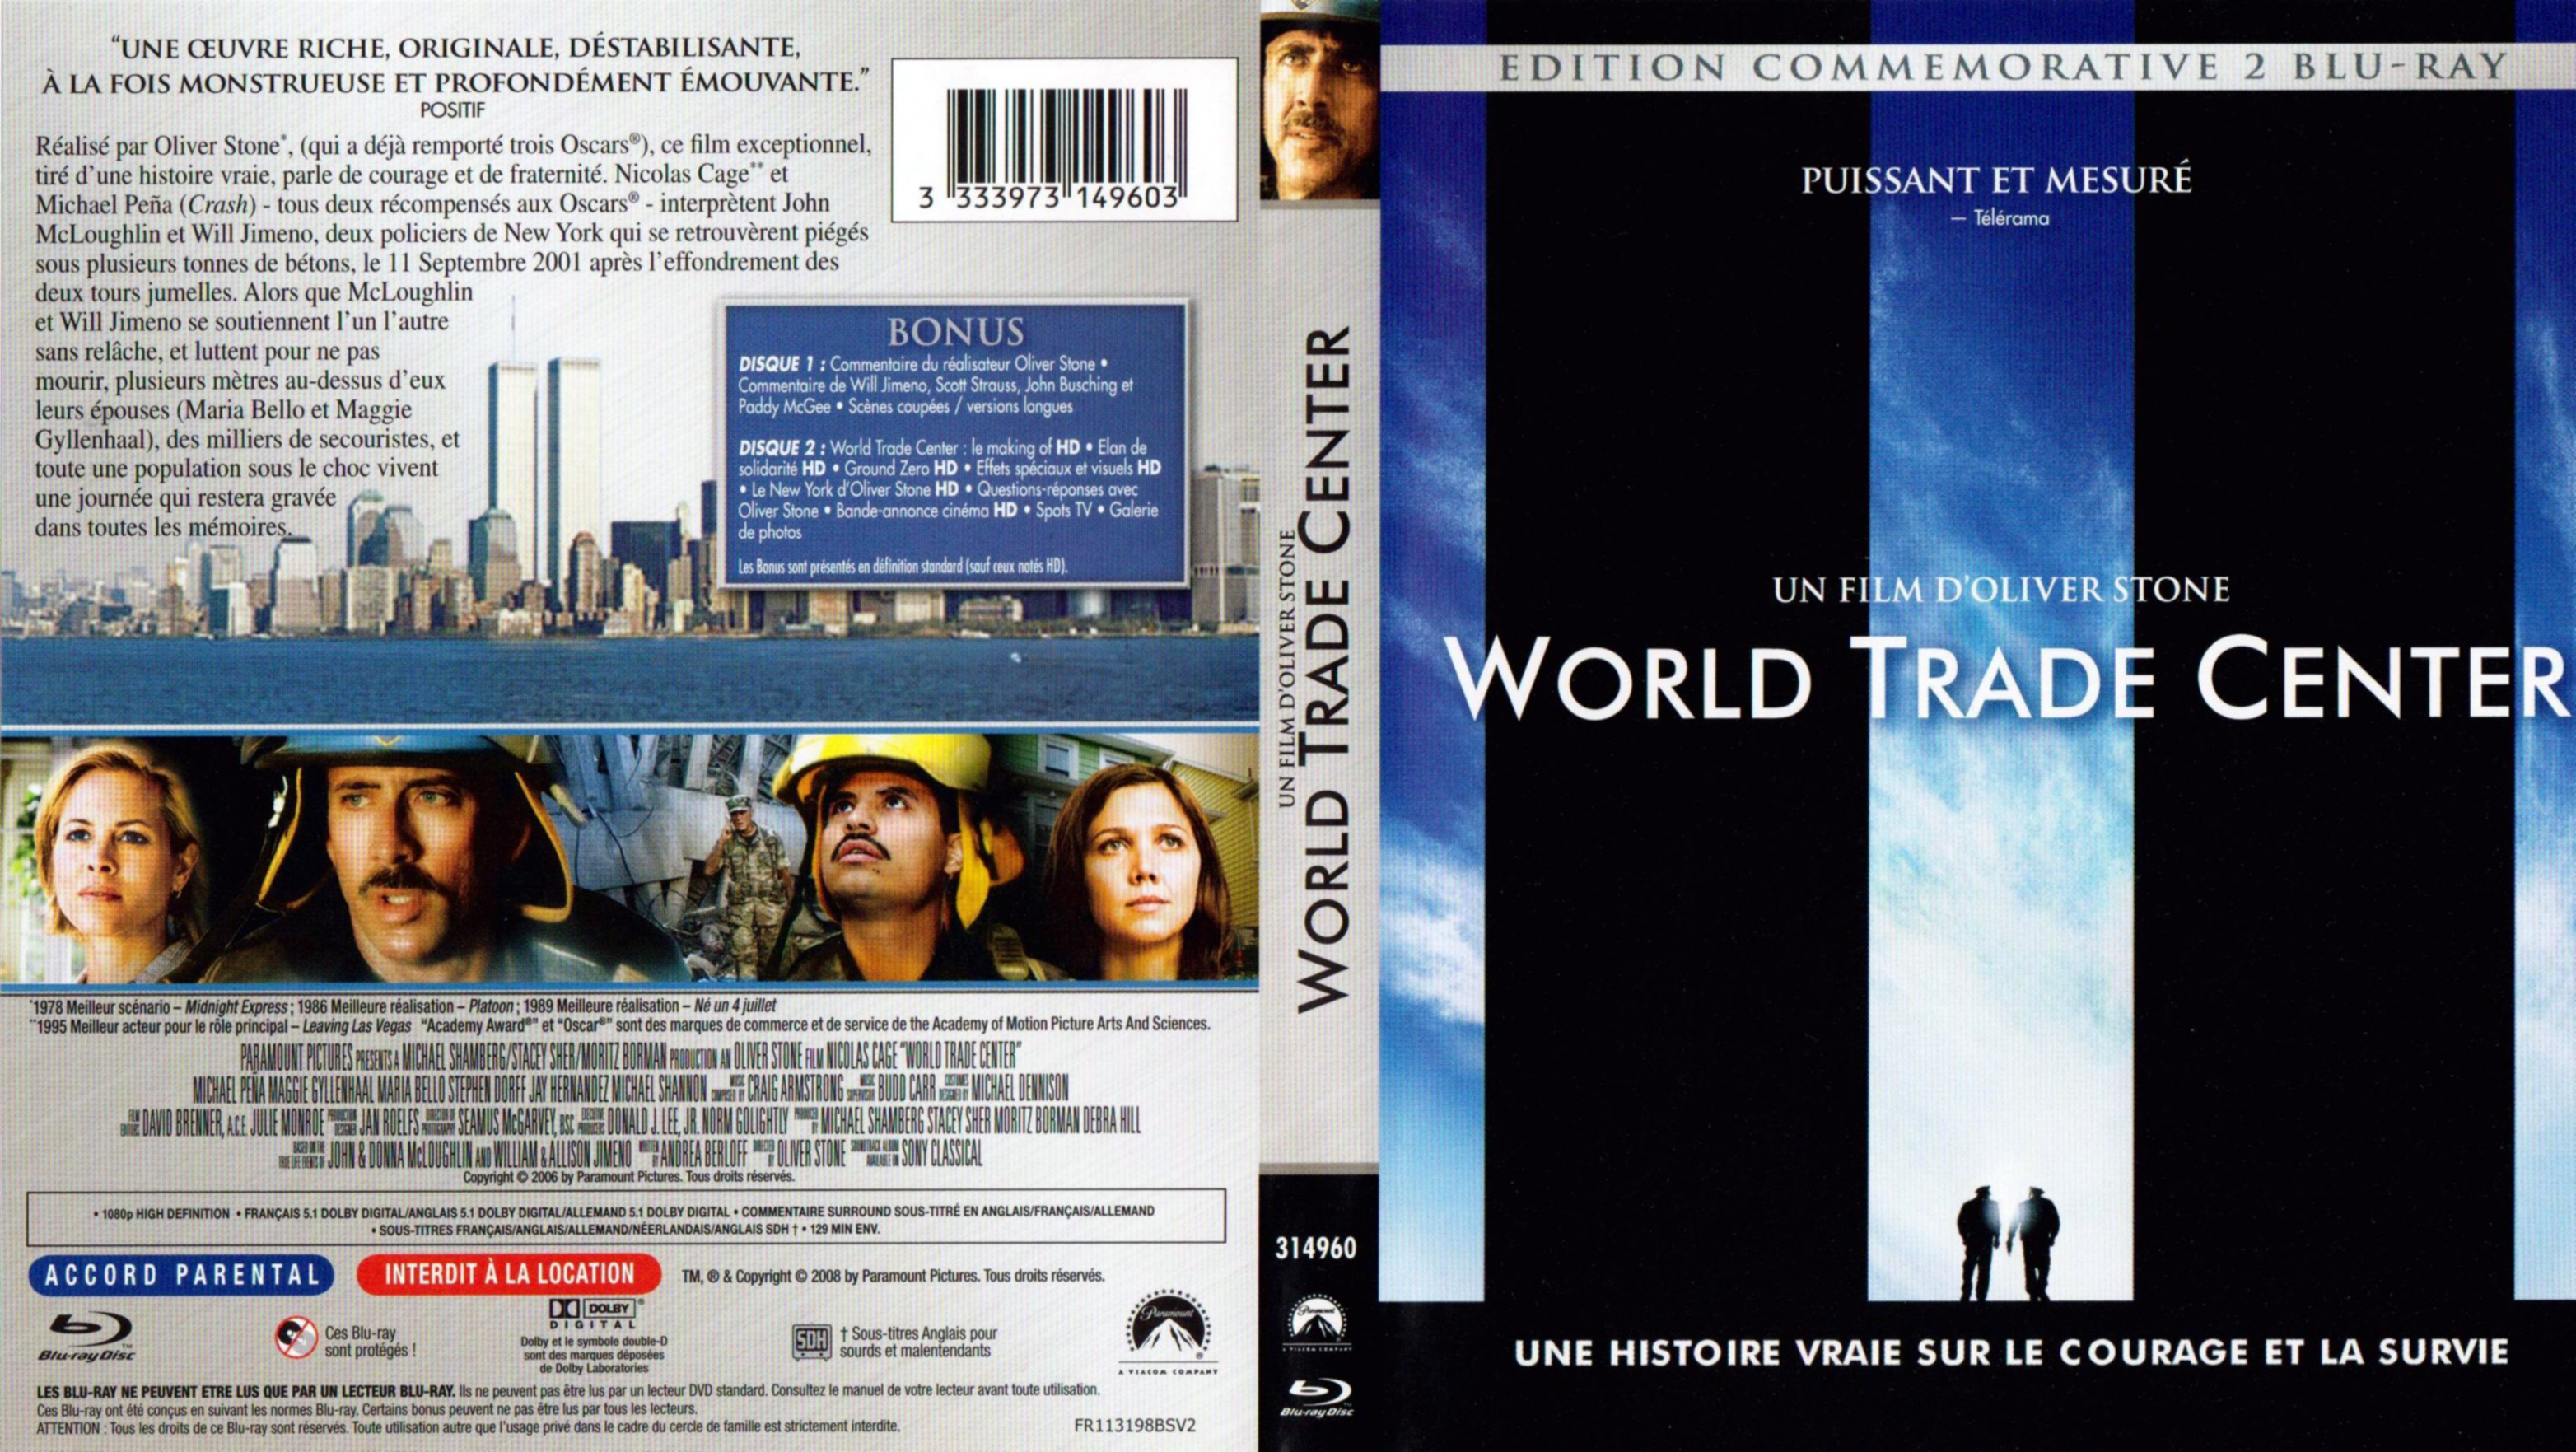 Jaquette DVD World Trade Center (BLU-RAY)